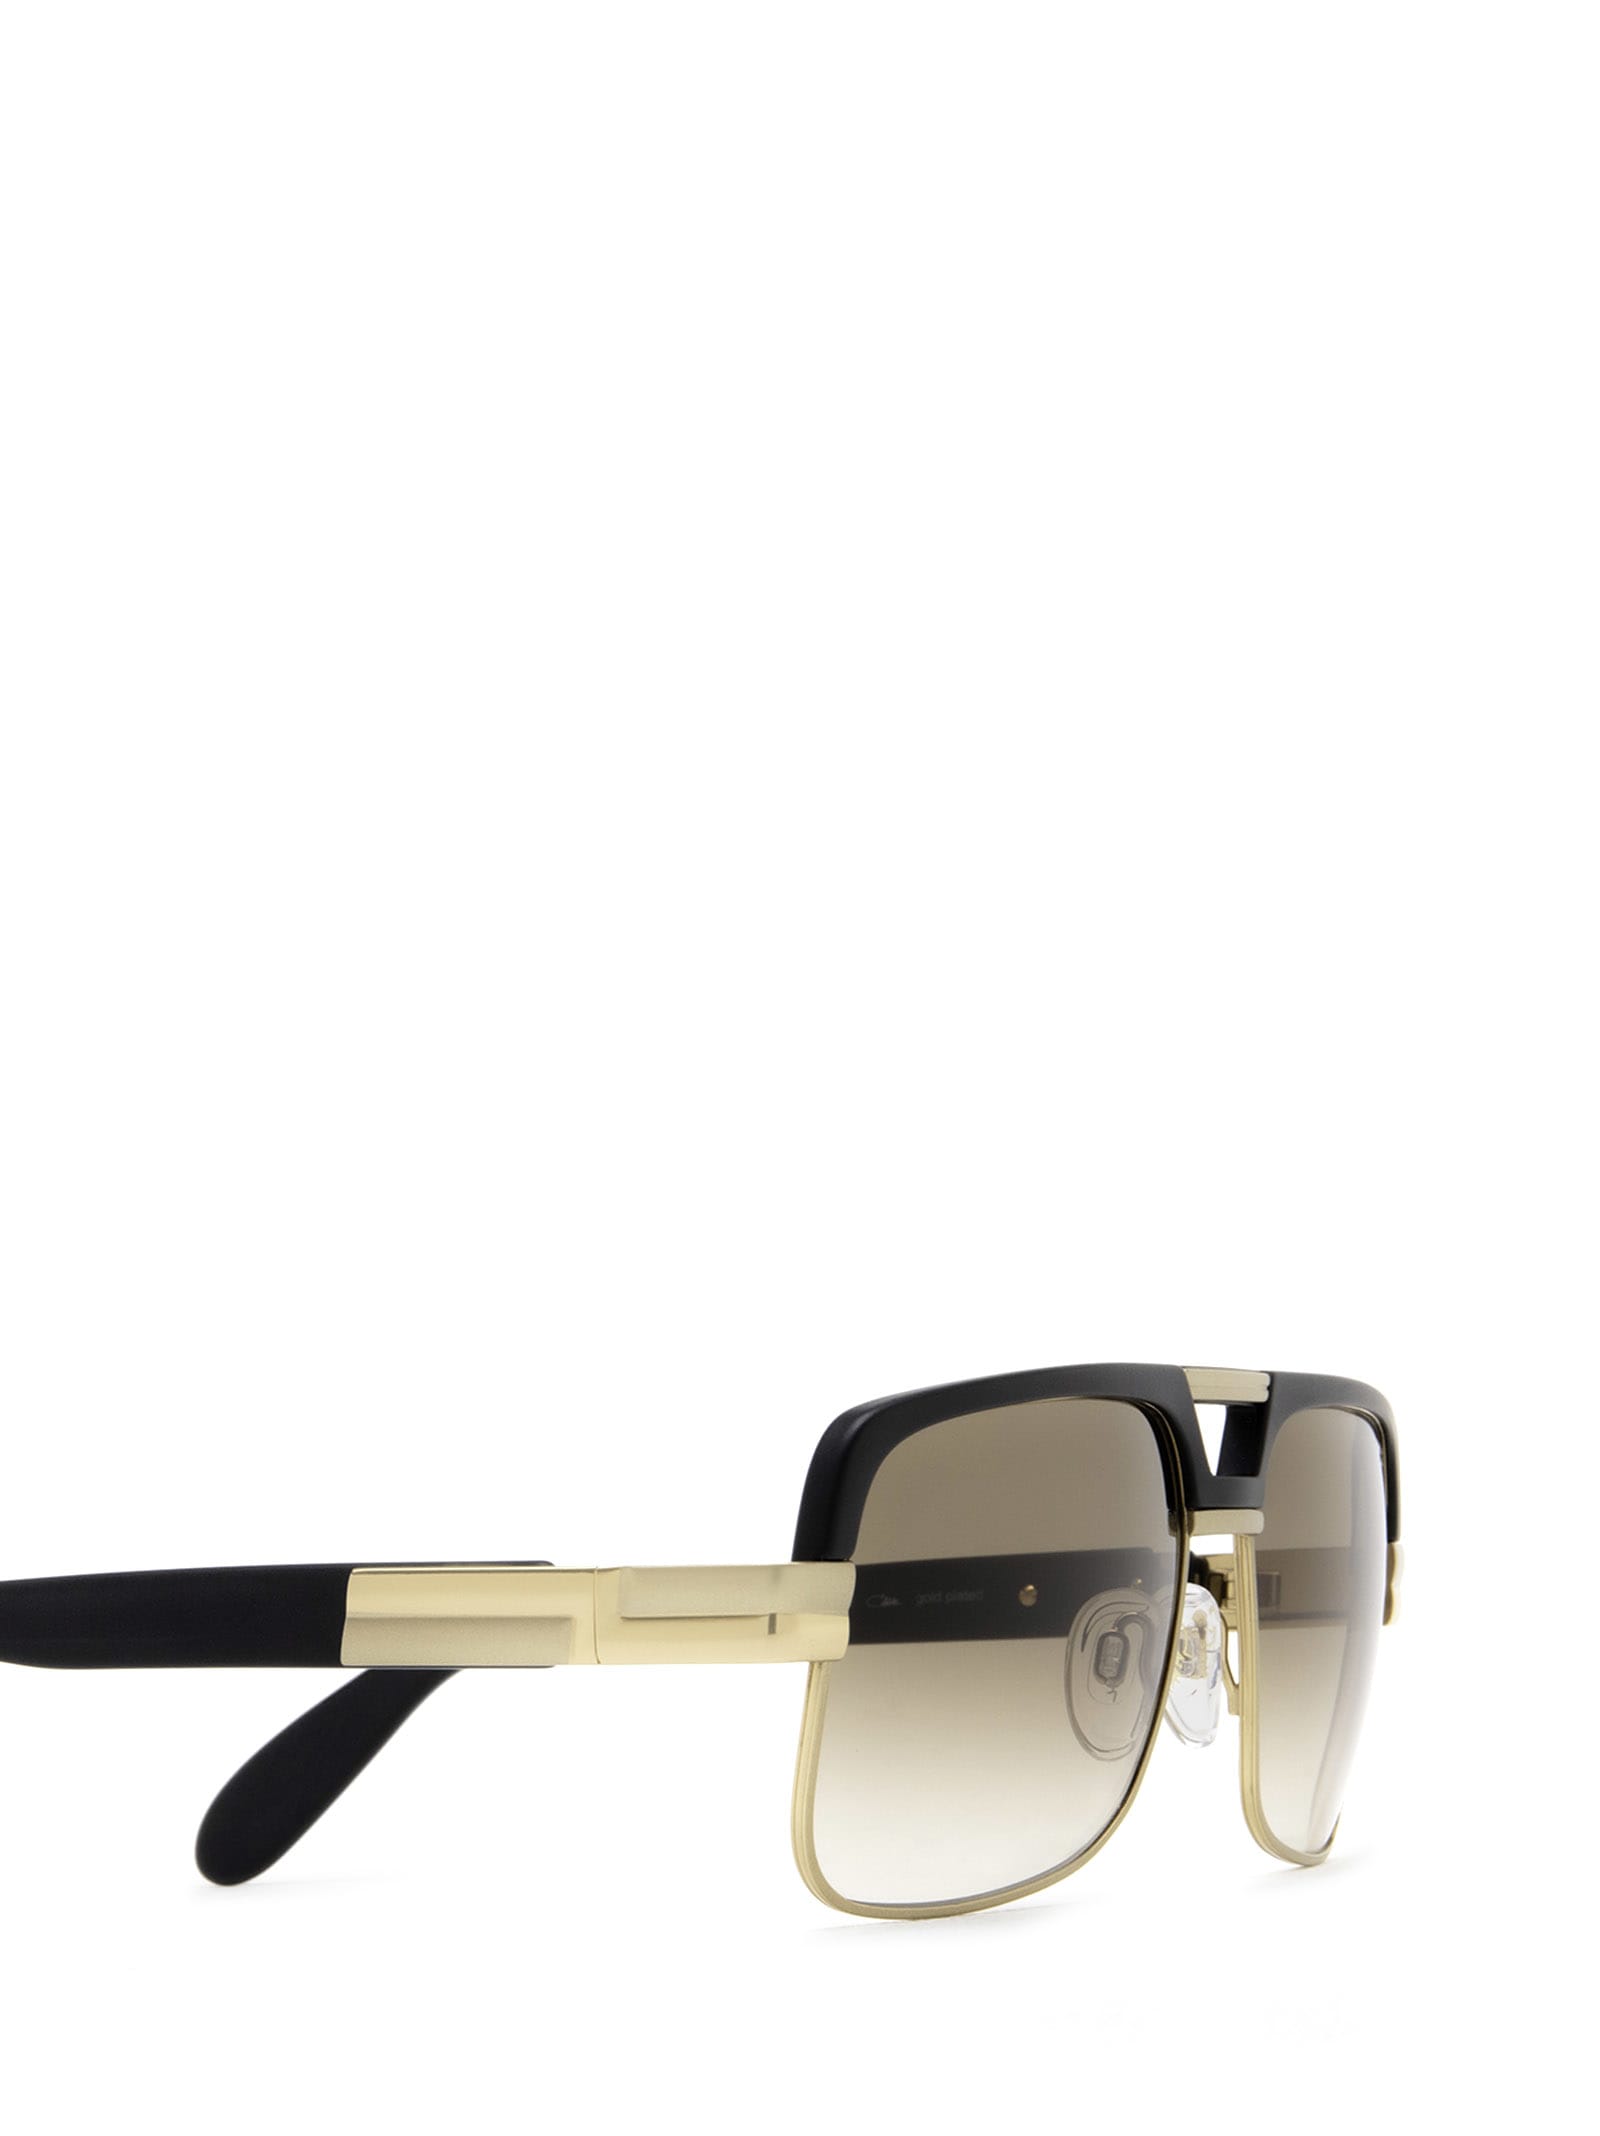 Shop Cazal 993 Black - Gold Sunglasses